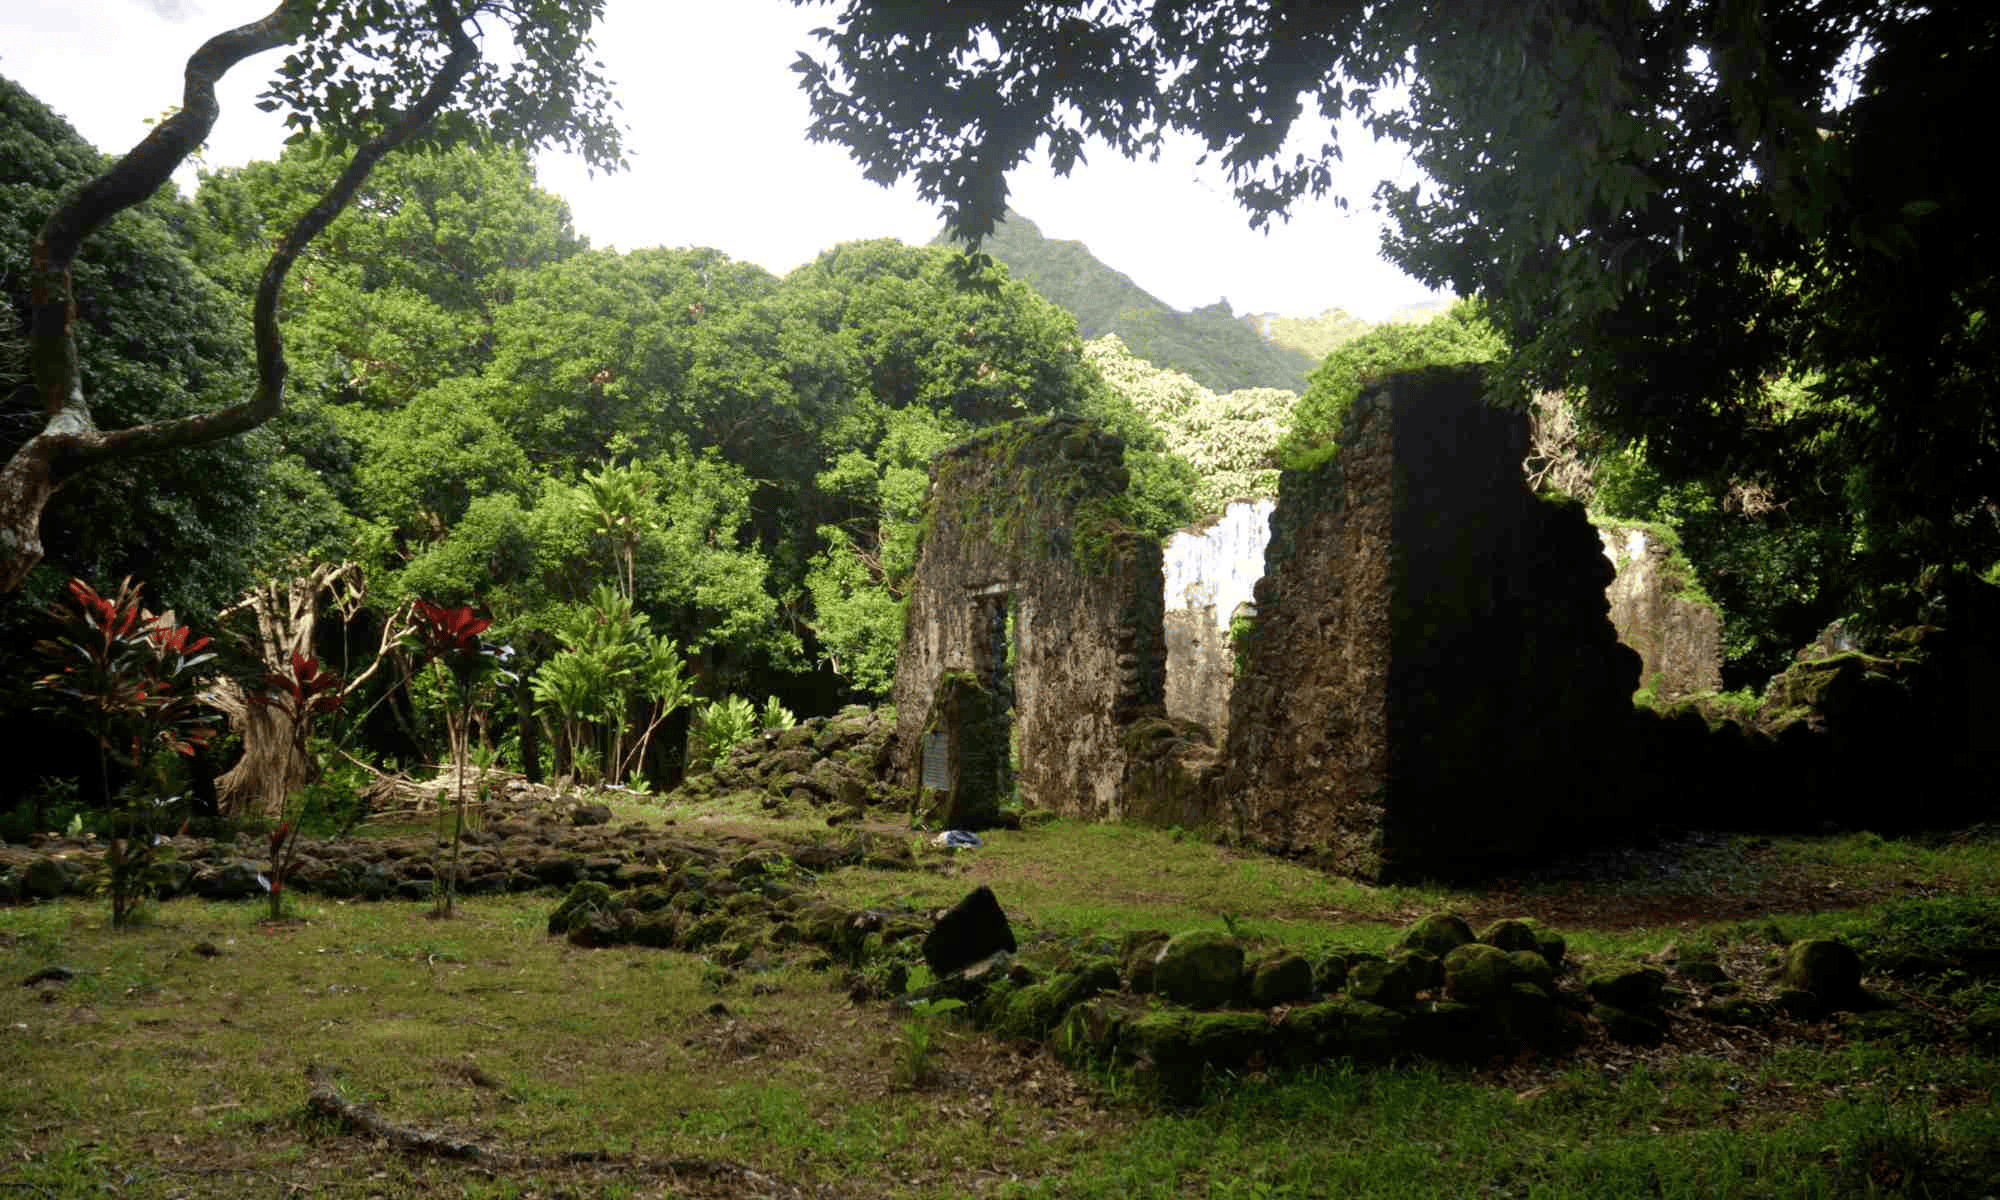 Kaniakapupu ruins in Oahu